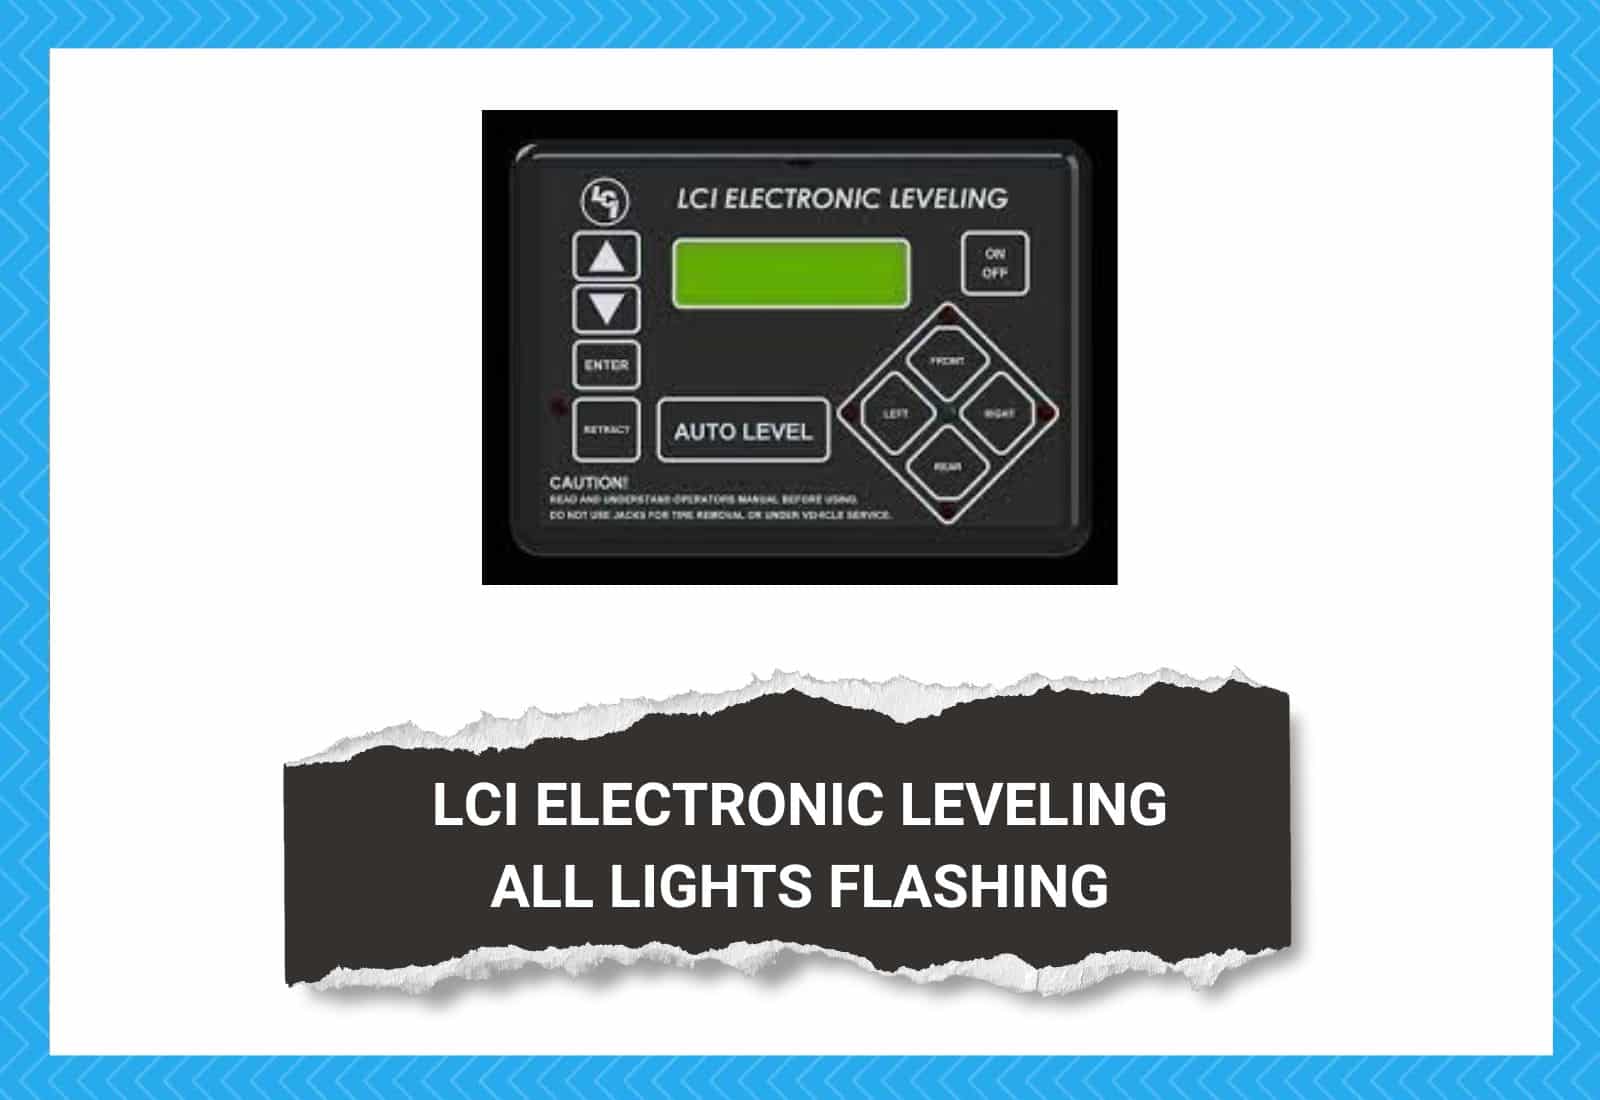 LCI Electronic Leveling All Lights Flashing